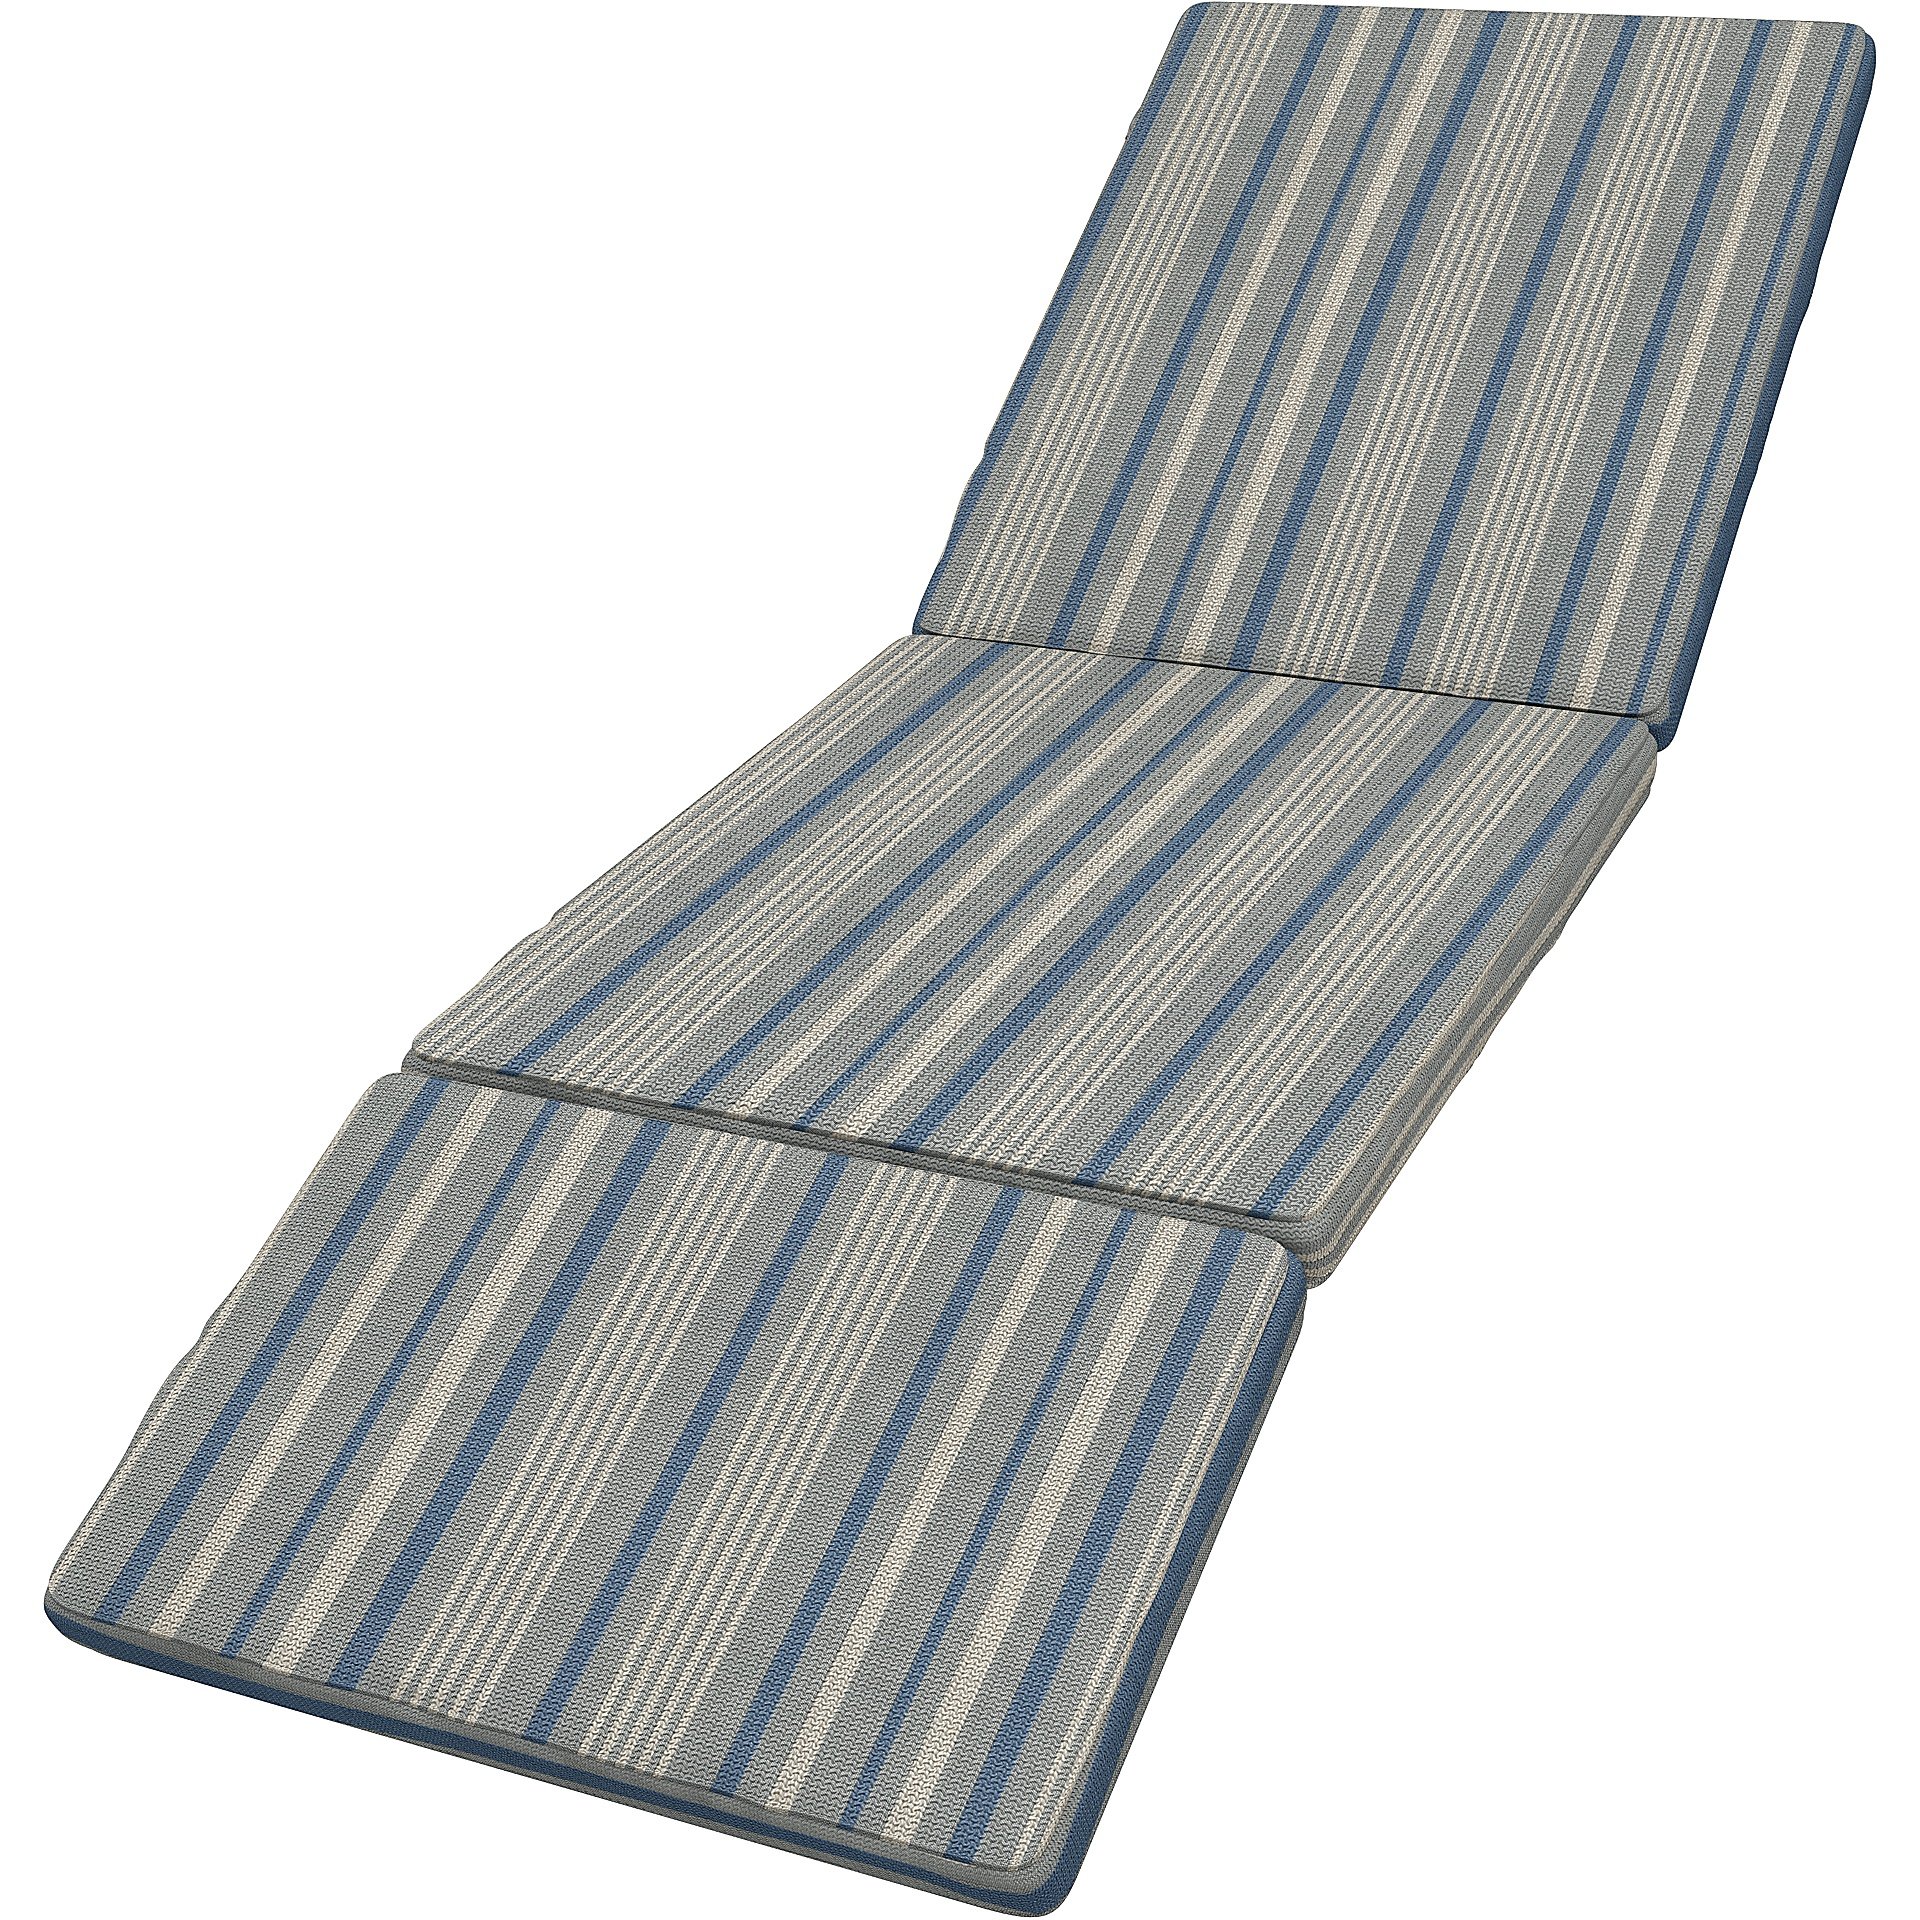 IKEA - Froson/Duvholmen Sunbed Cushion Cover, Ocean Blue, Outdoor - Bemz